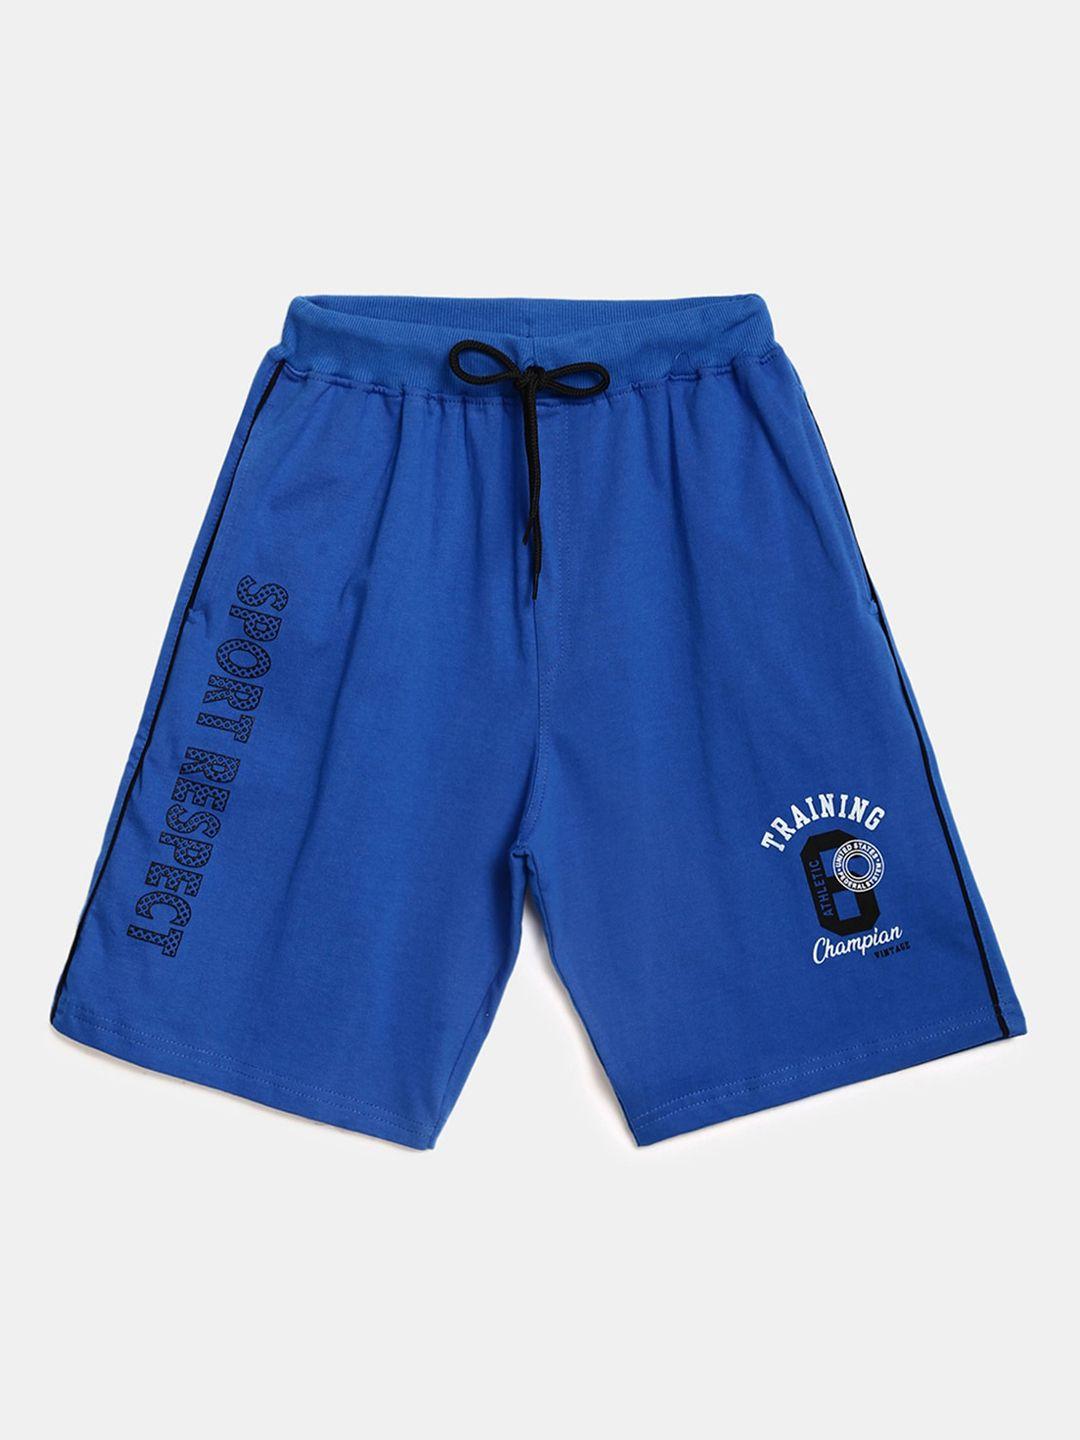 v-mart unisex kids blue printed outdoor cotton shorts